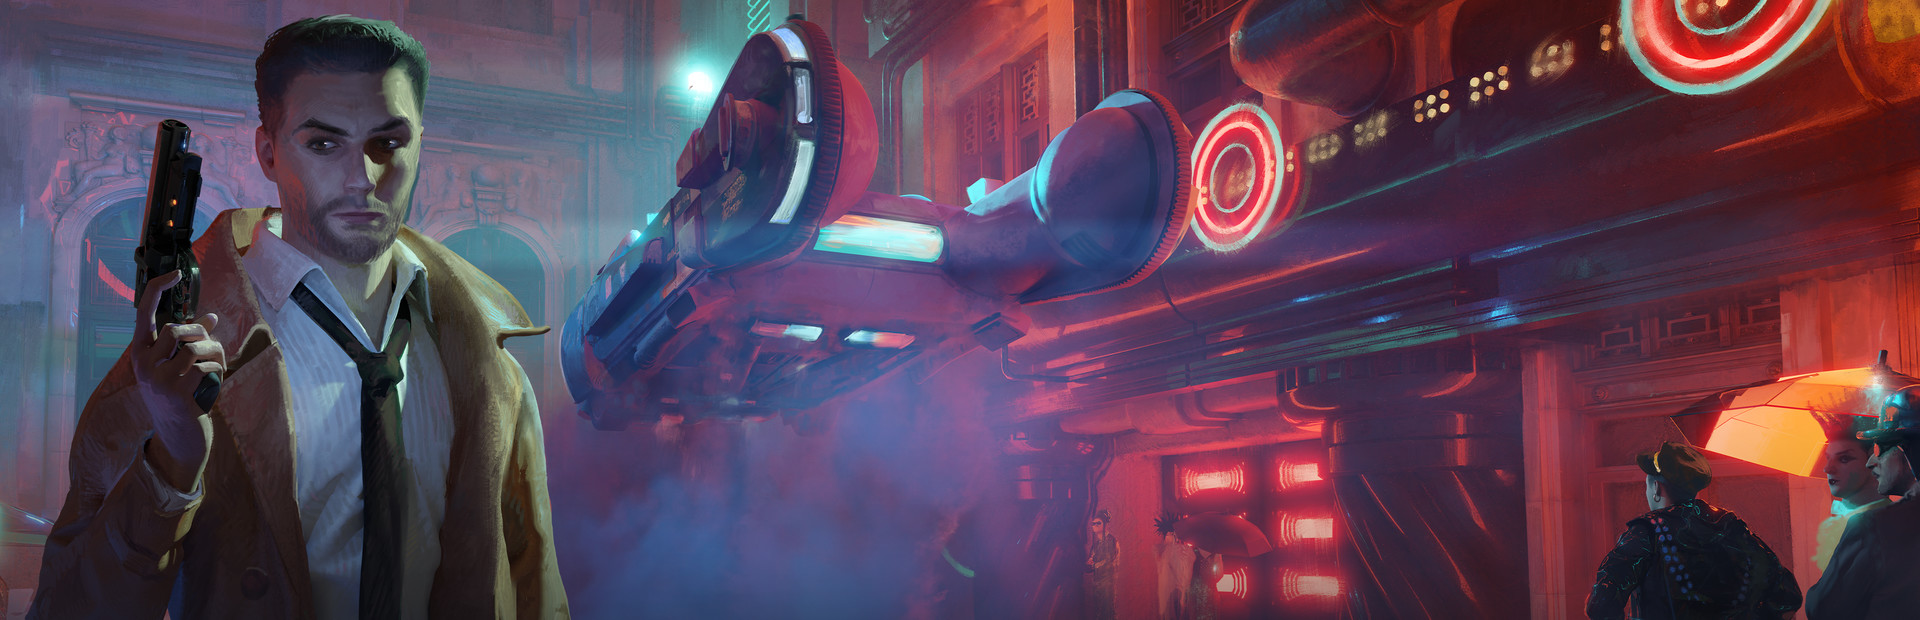 Blade Runner: Enhanced Edition cover image